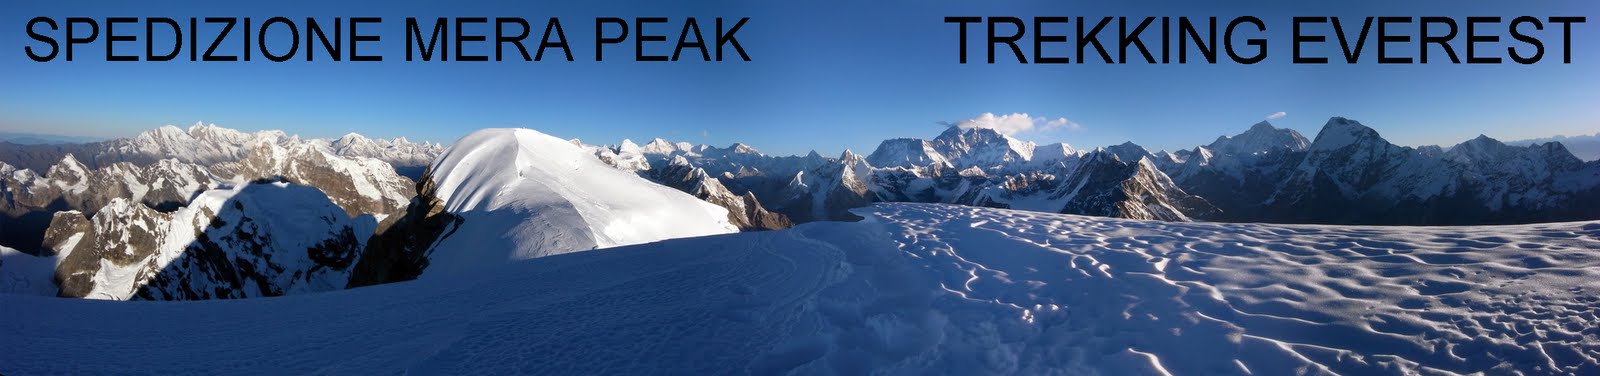 Spedizione Mera Peak - Trekking Everest B.C.